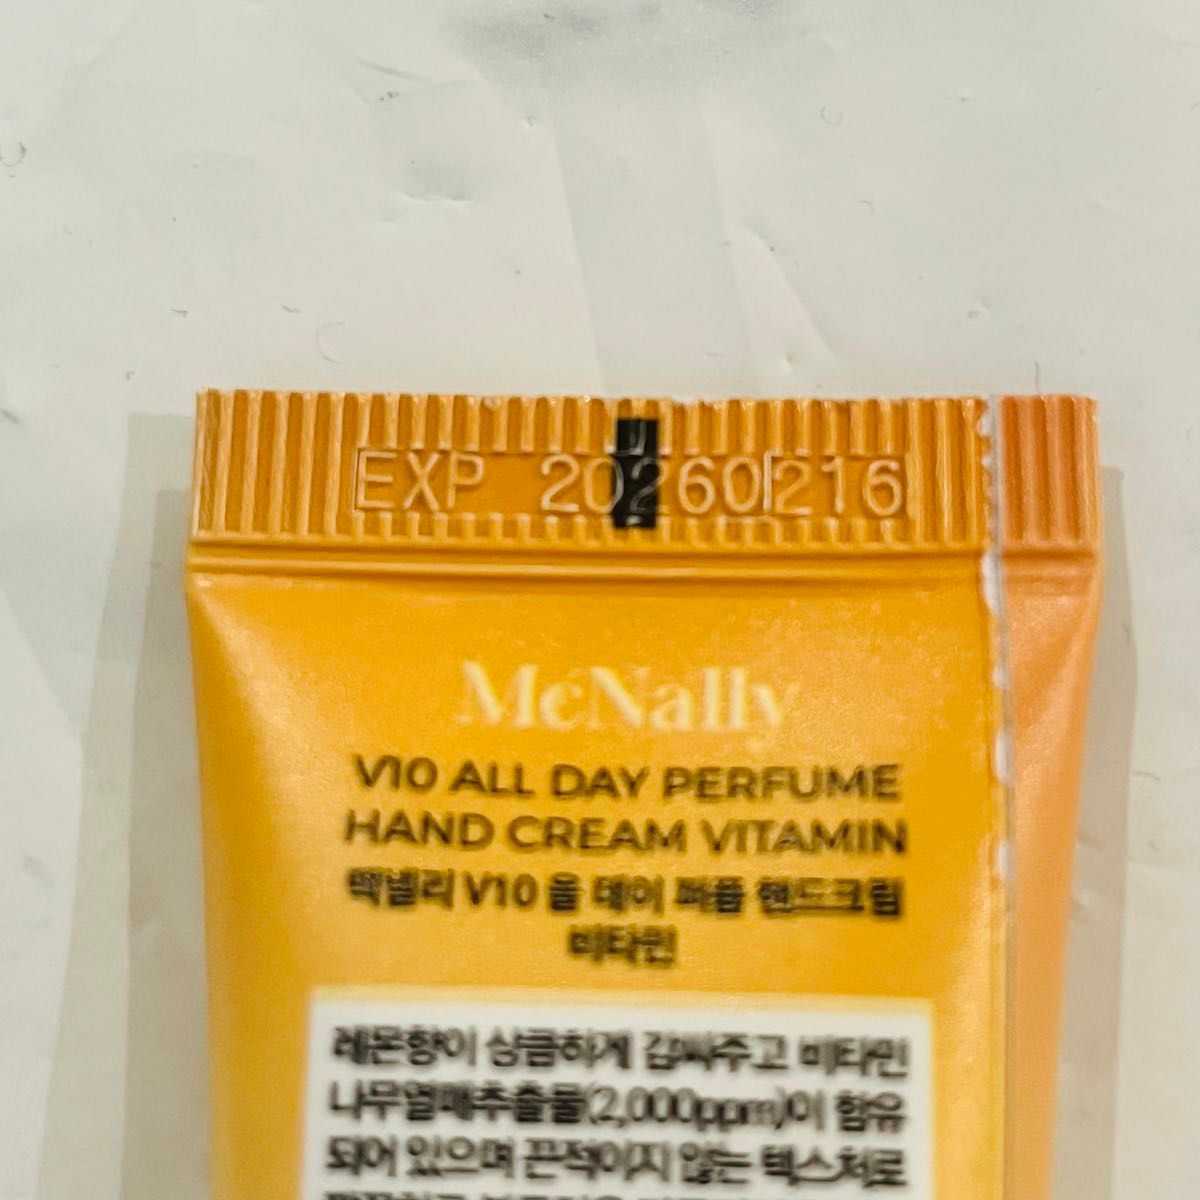 McNally V10 ALL DAY HANDCREAM ビタミン Vitamin ハンドクリーム 韓国人気 パヒューム 